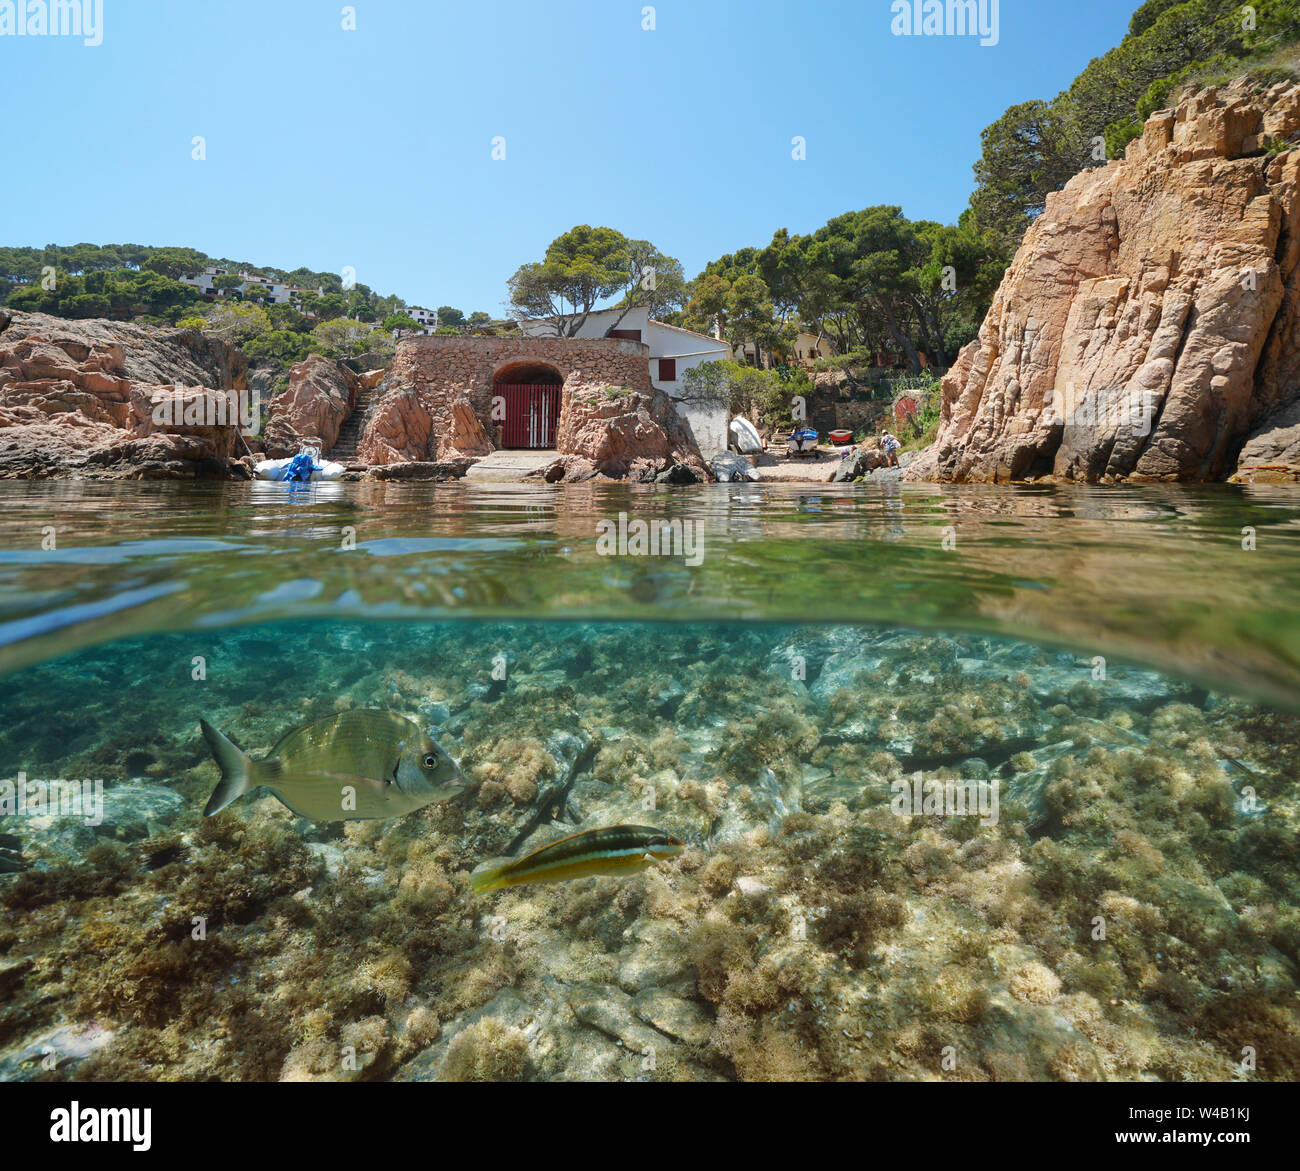 Spain Costa Brava rocky cove with boathouse and fish underwater, Mediterranean sea, split view, Aigua Xelida, Palafrugell, Catalonia Stock Photo